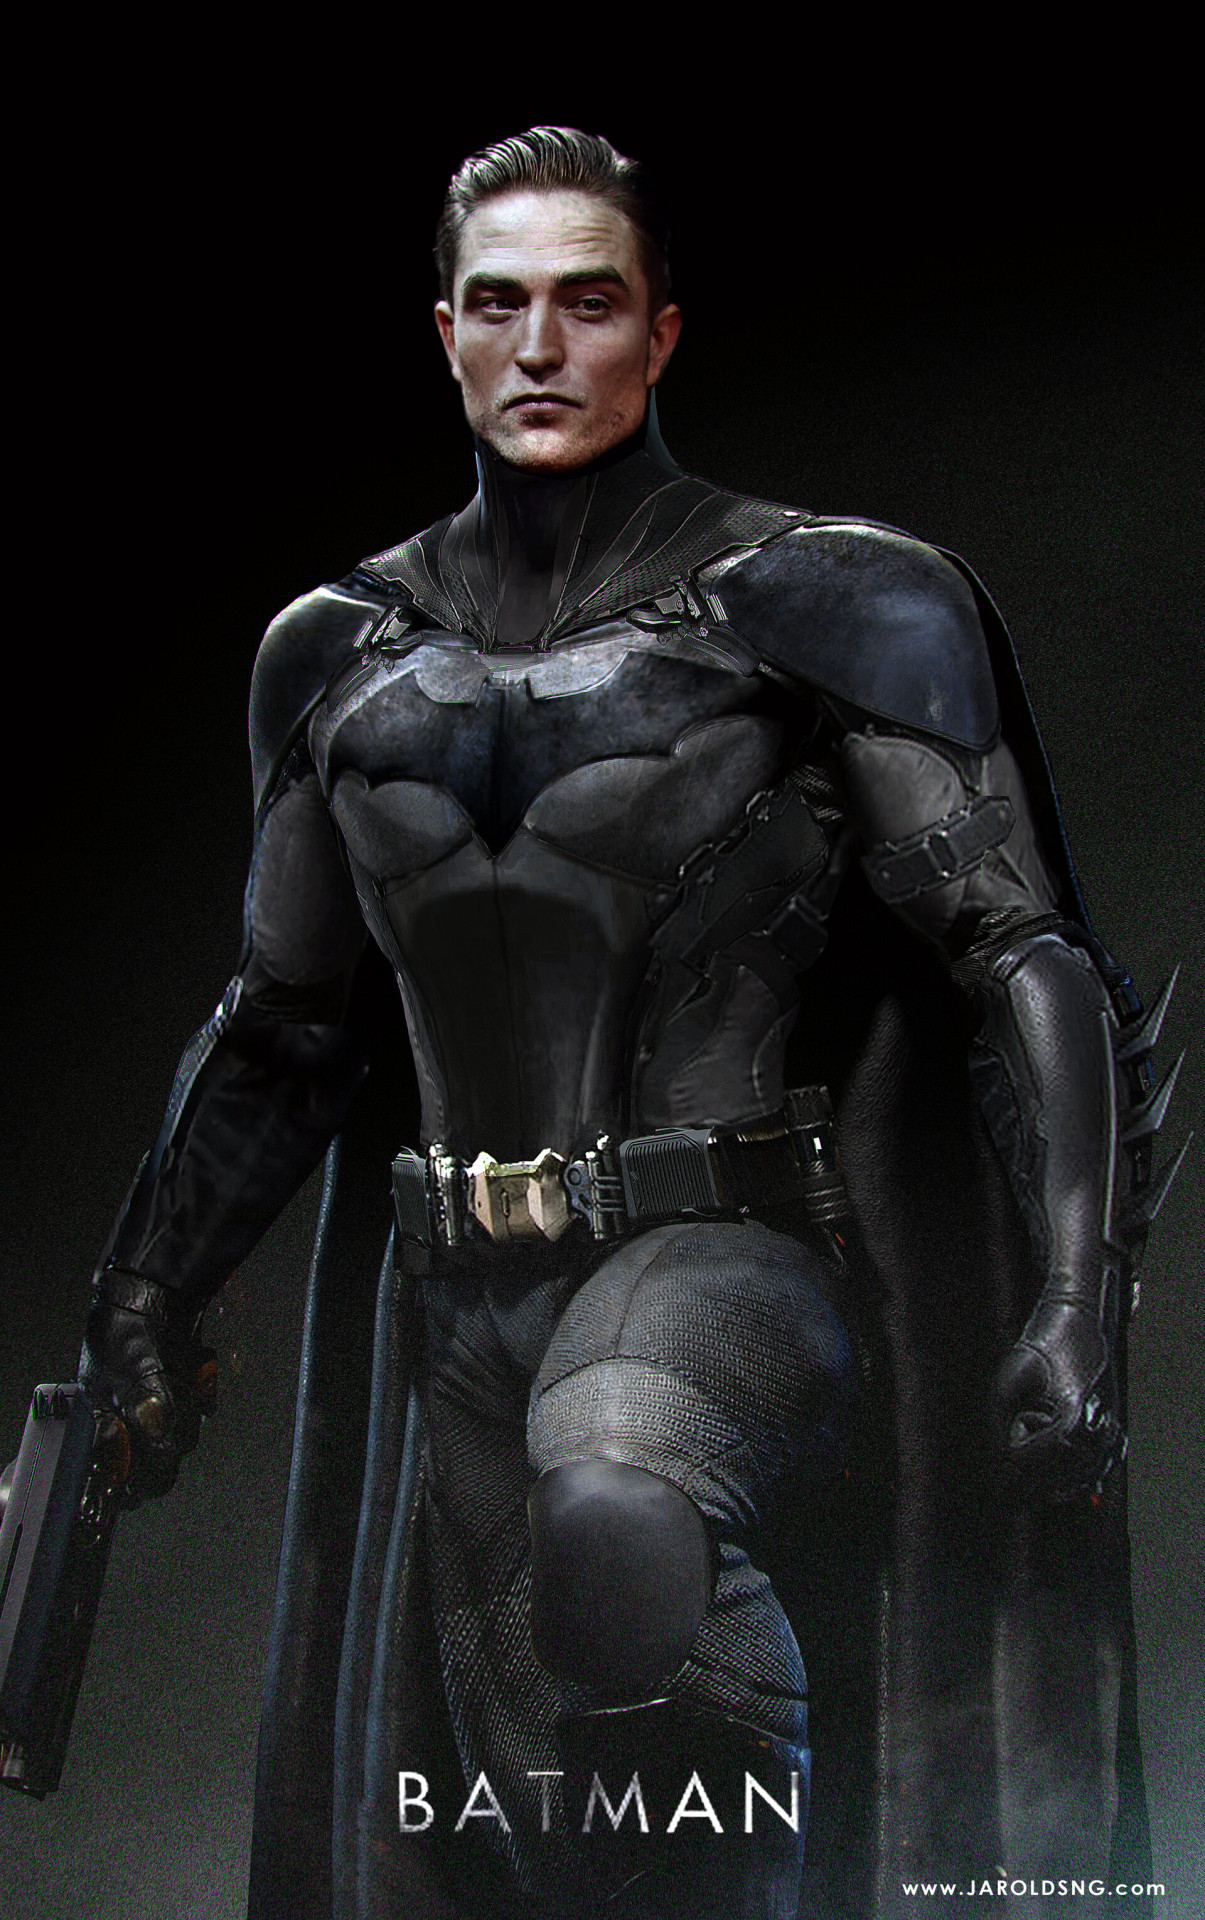 BATMAN NOTES — Batman Concept Art Robert Pattinson in costume by...